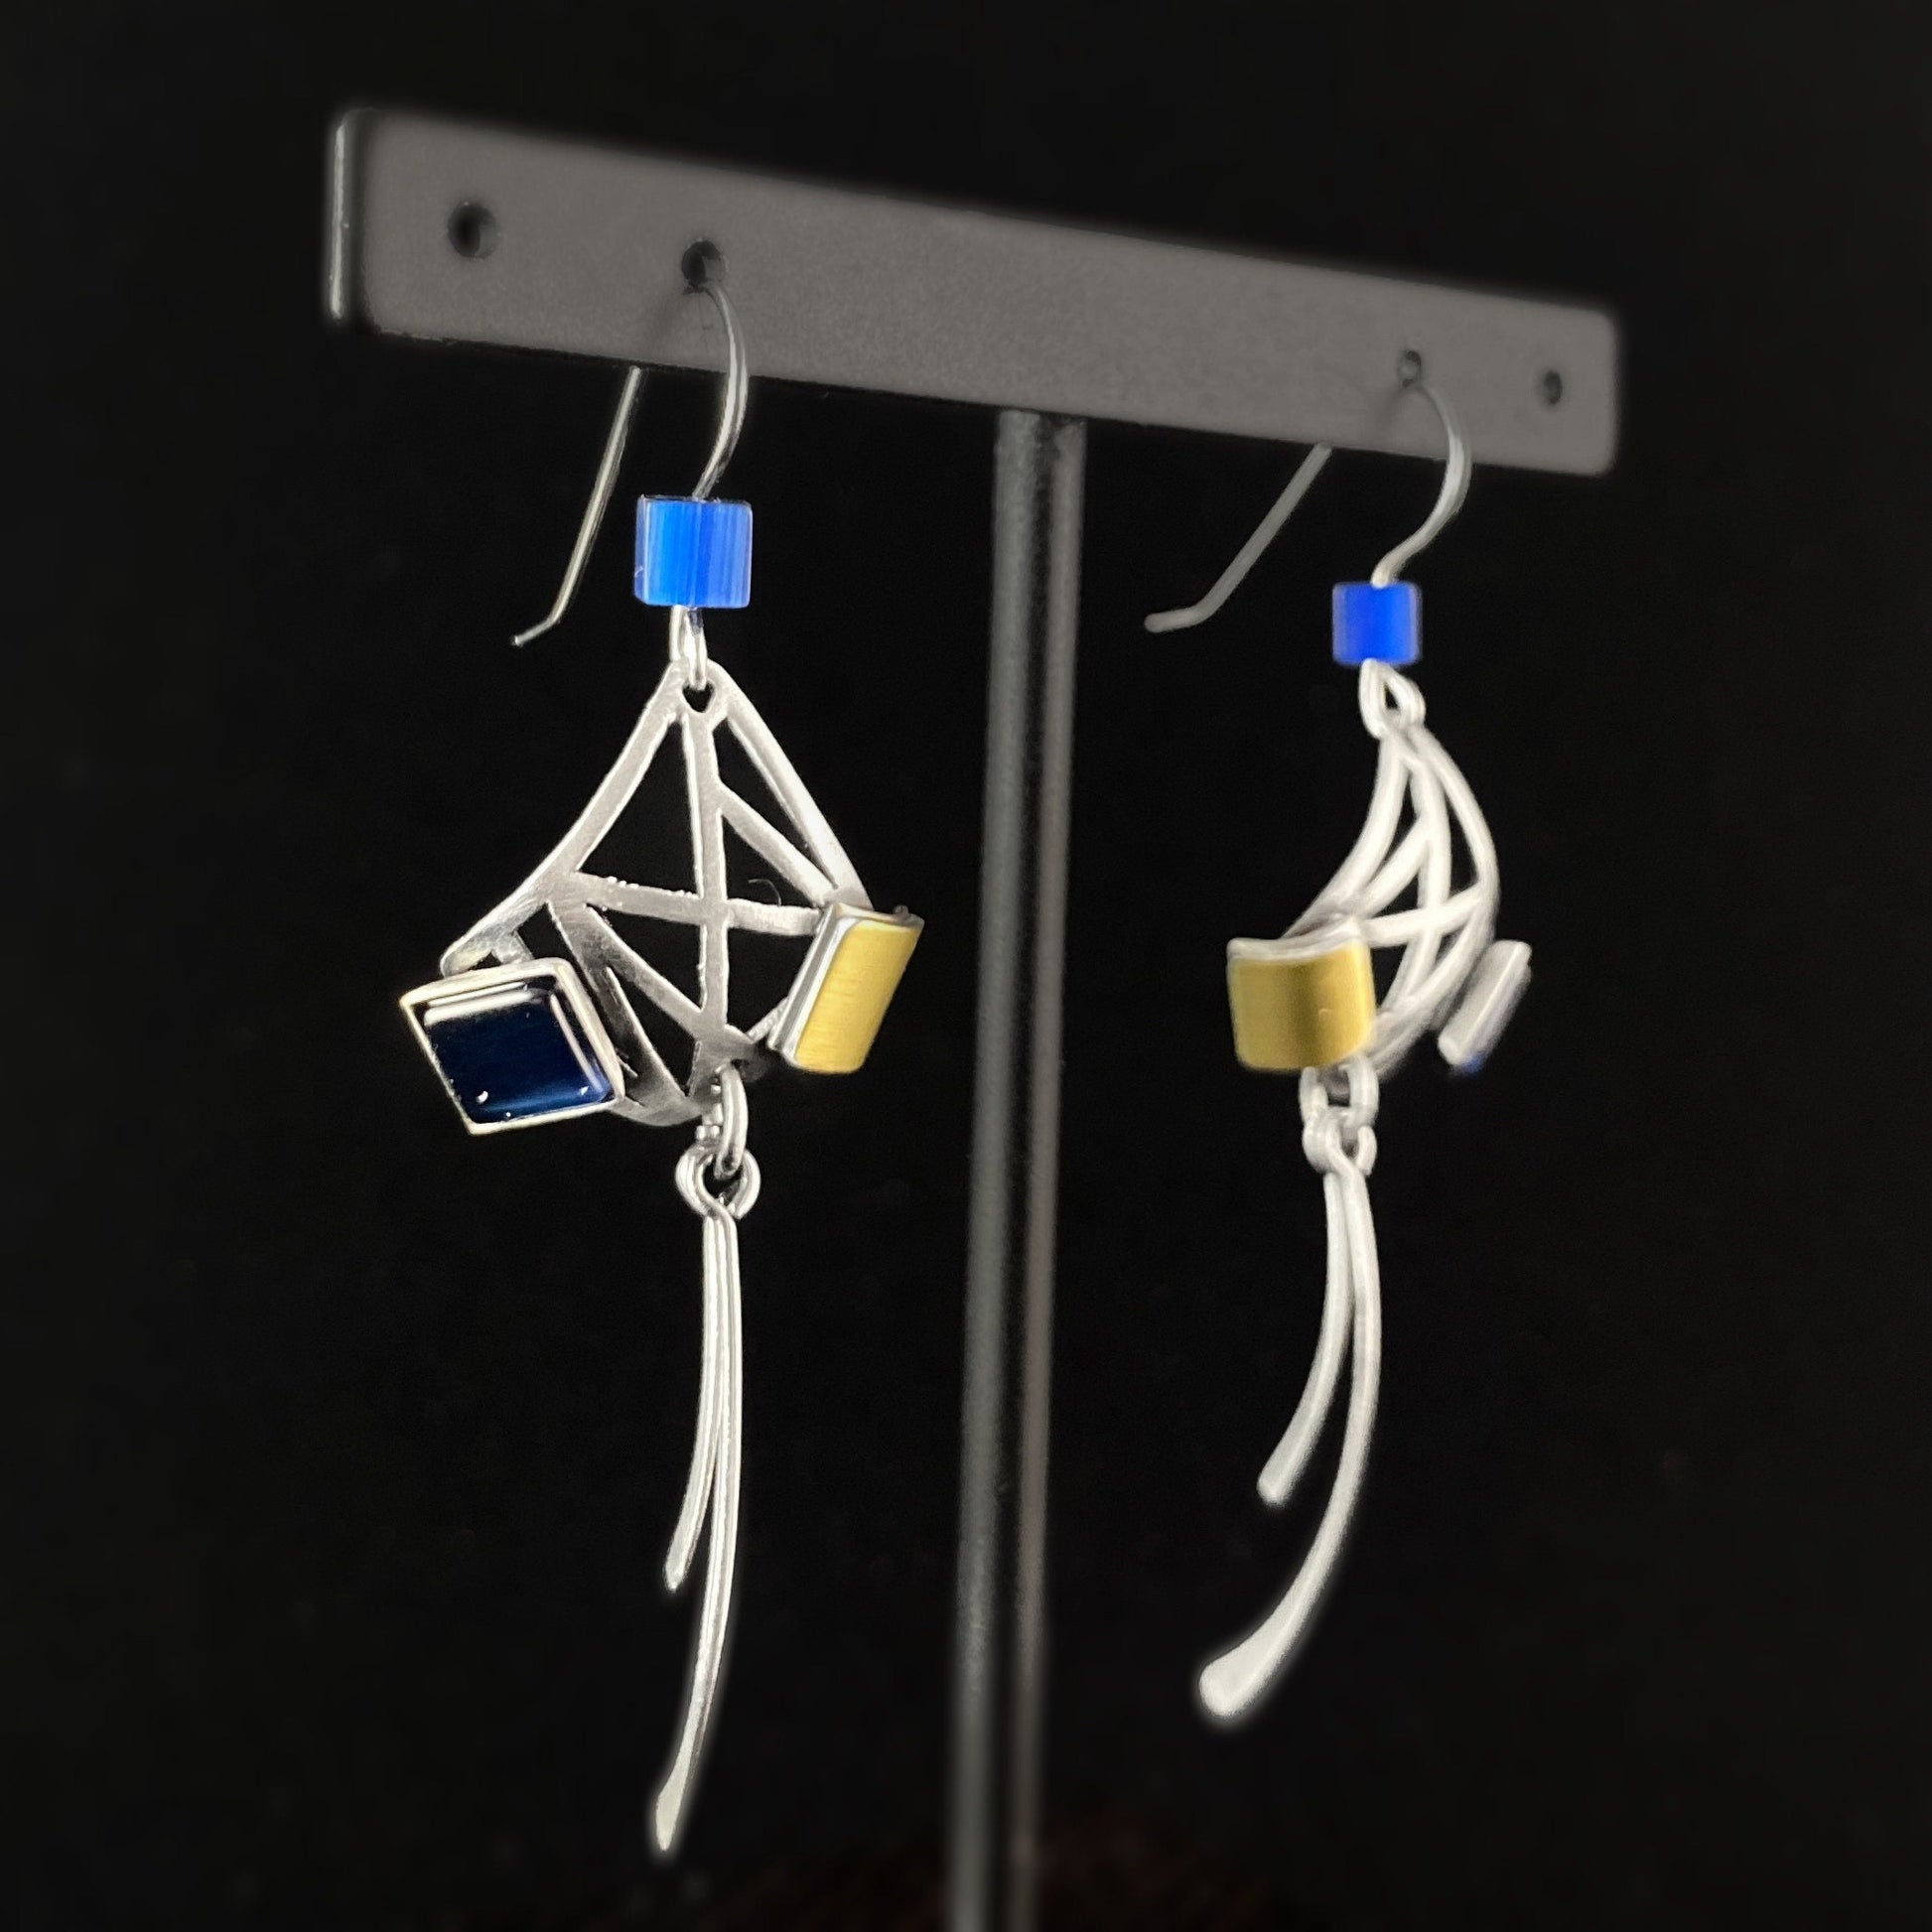 Lightweight Handmade Geometric Aluminum Earrings, Silver and Blue Dangle